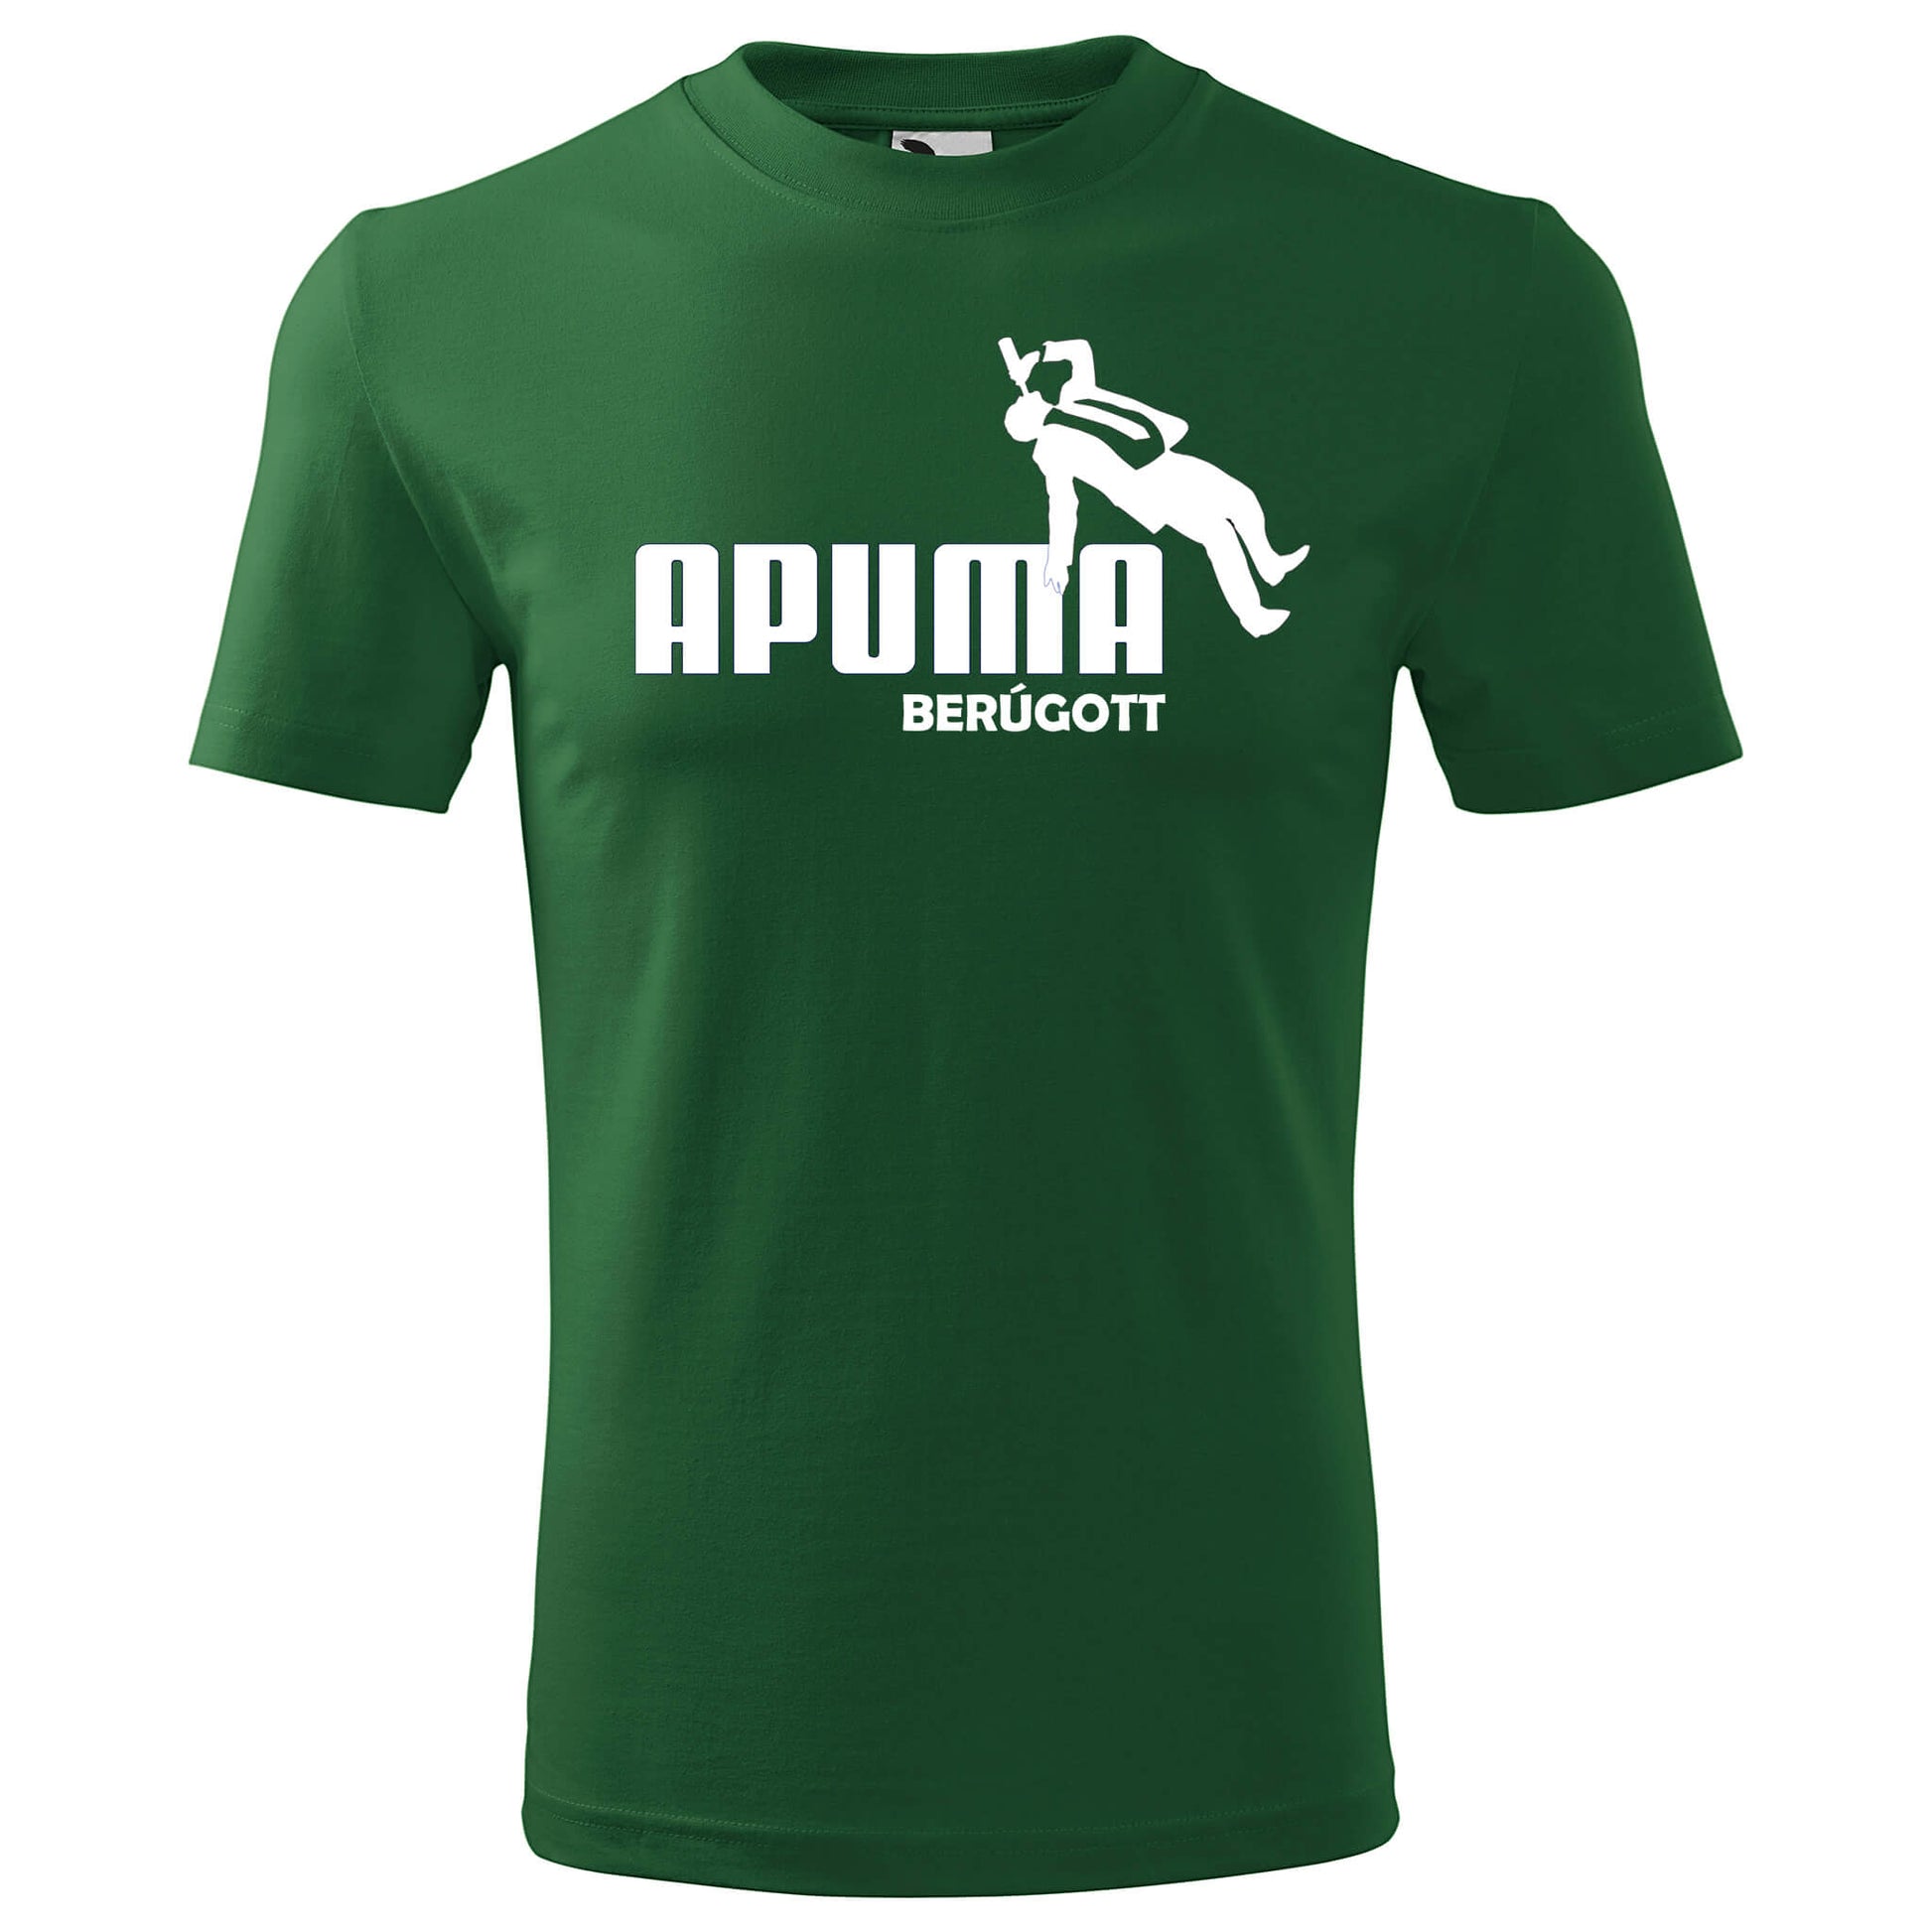 T-shirt - aPuma berúgott - rvdesignprint